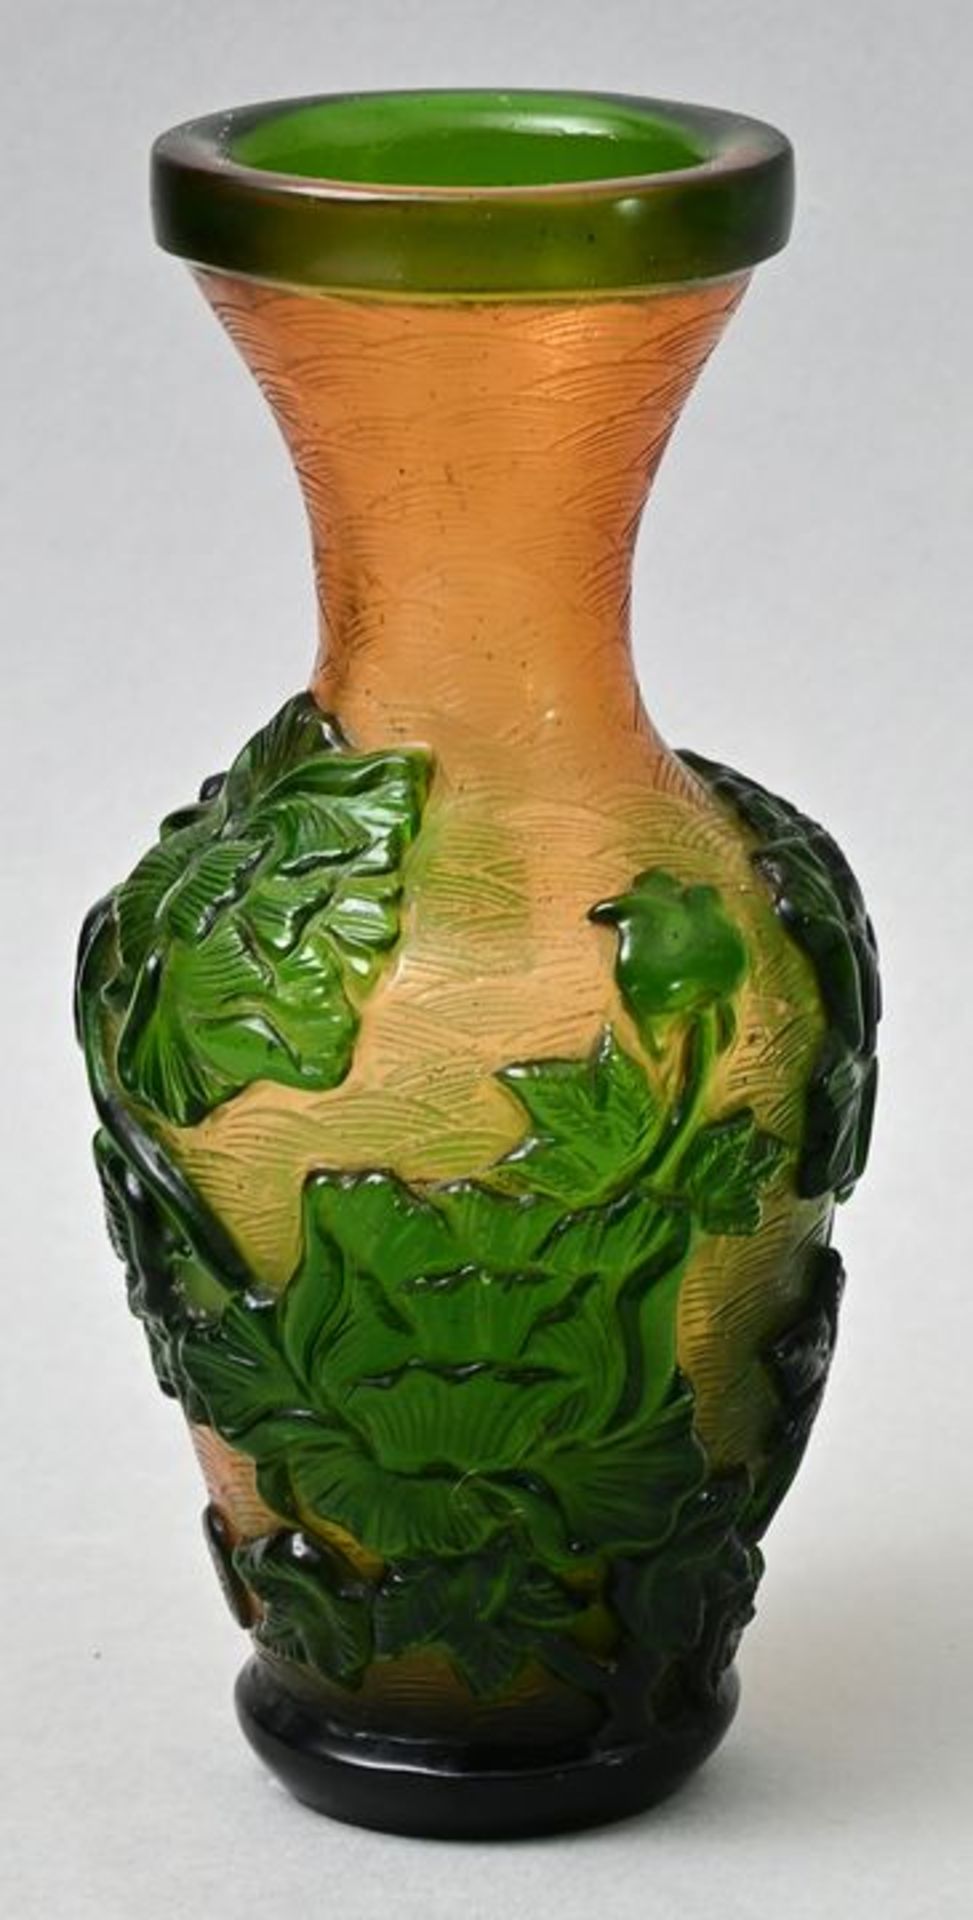 Vase Peking-Glas/ Peking glass vase - Image 2 of 5